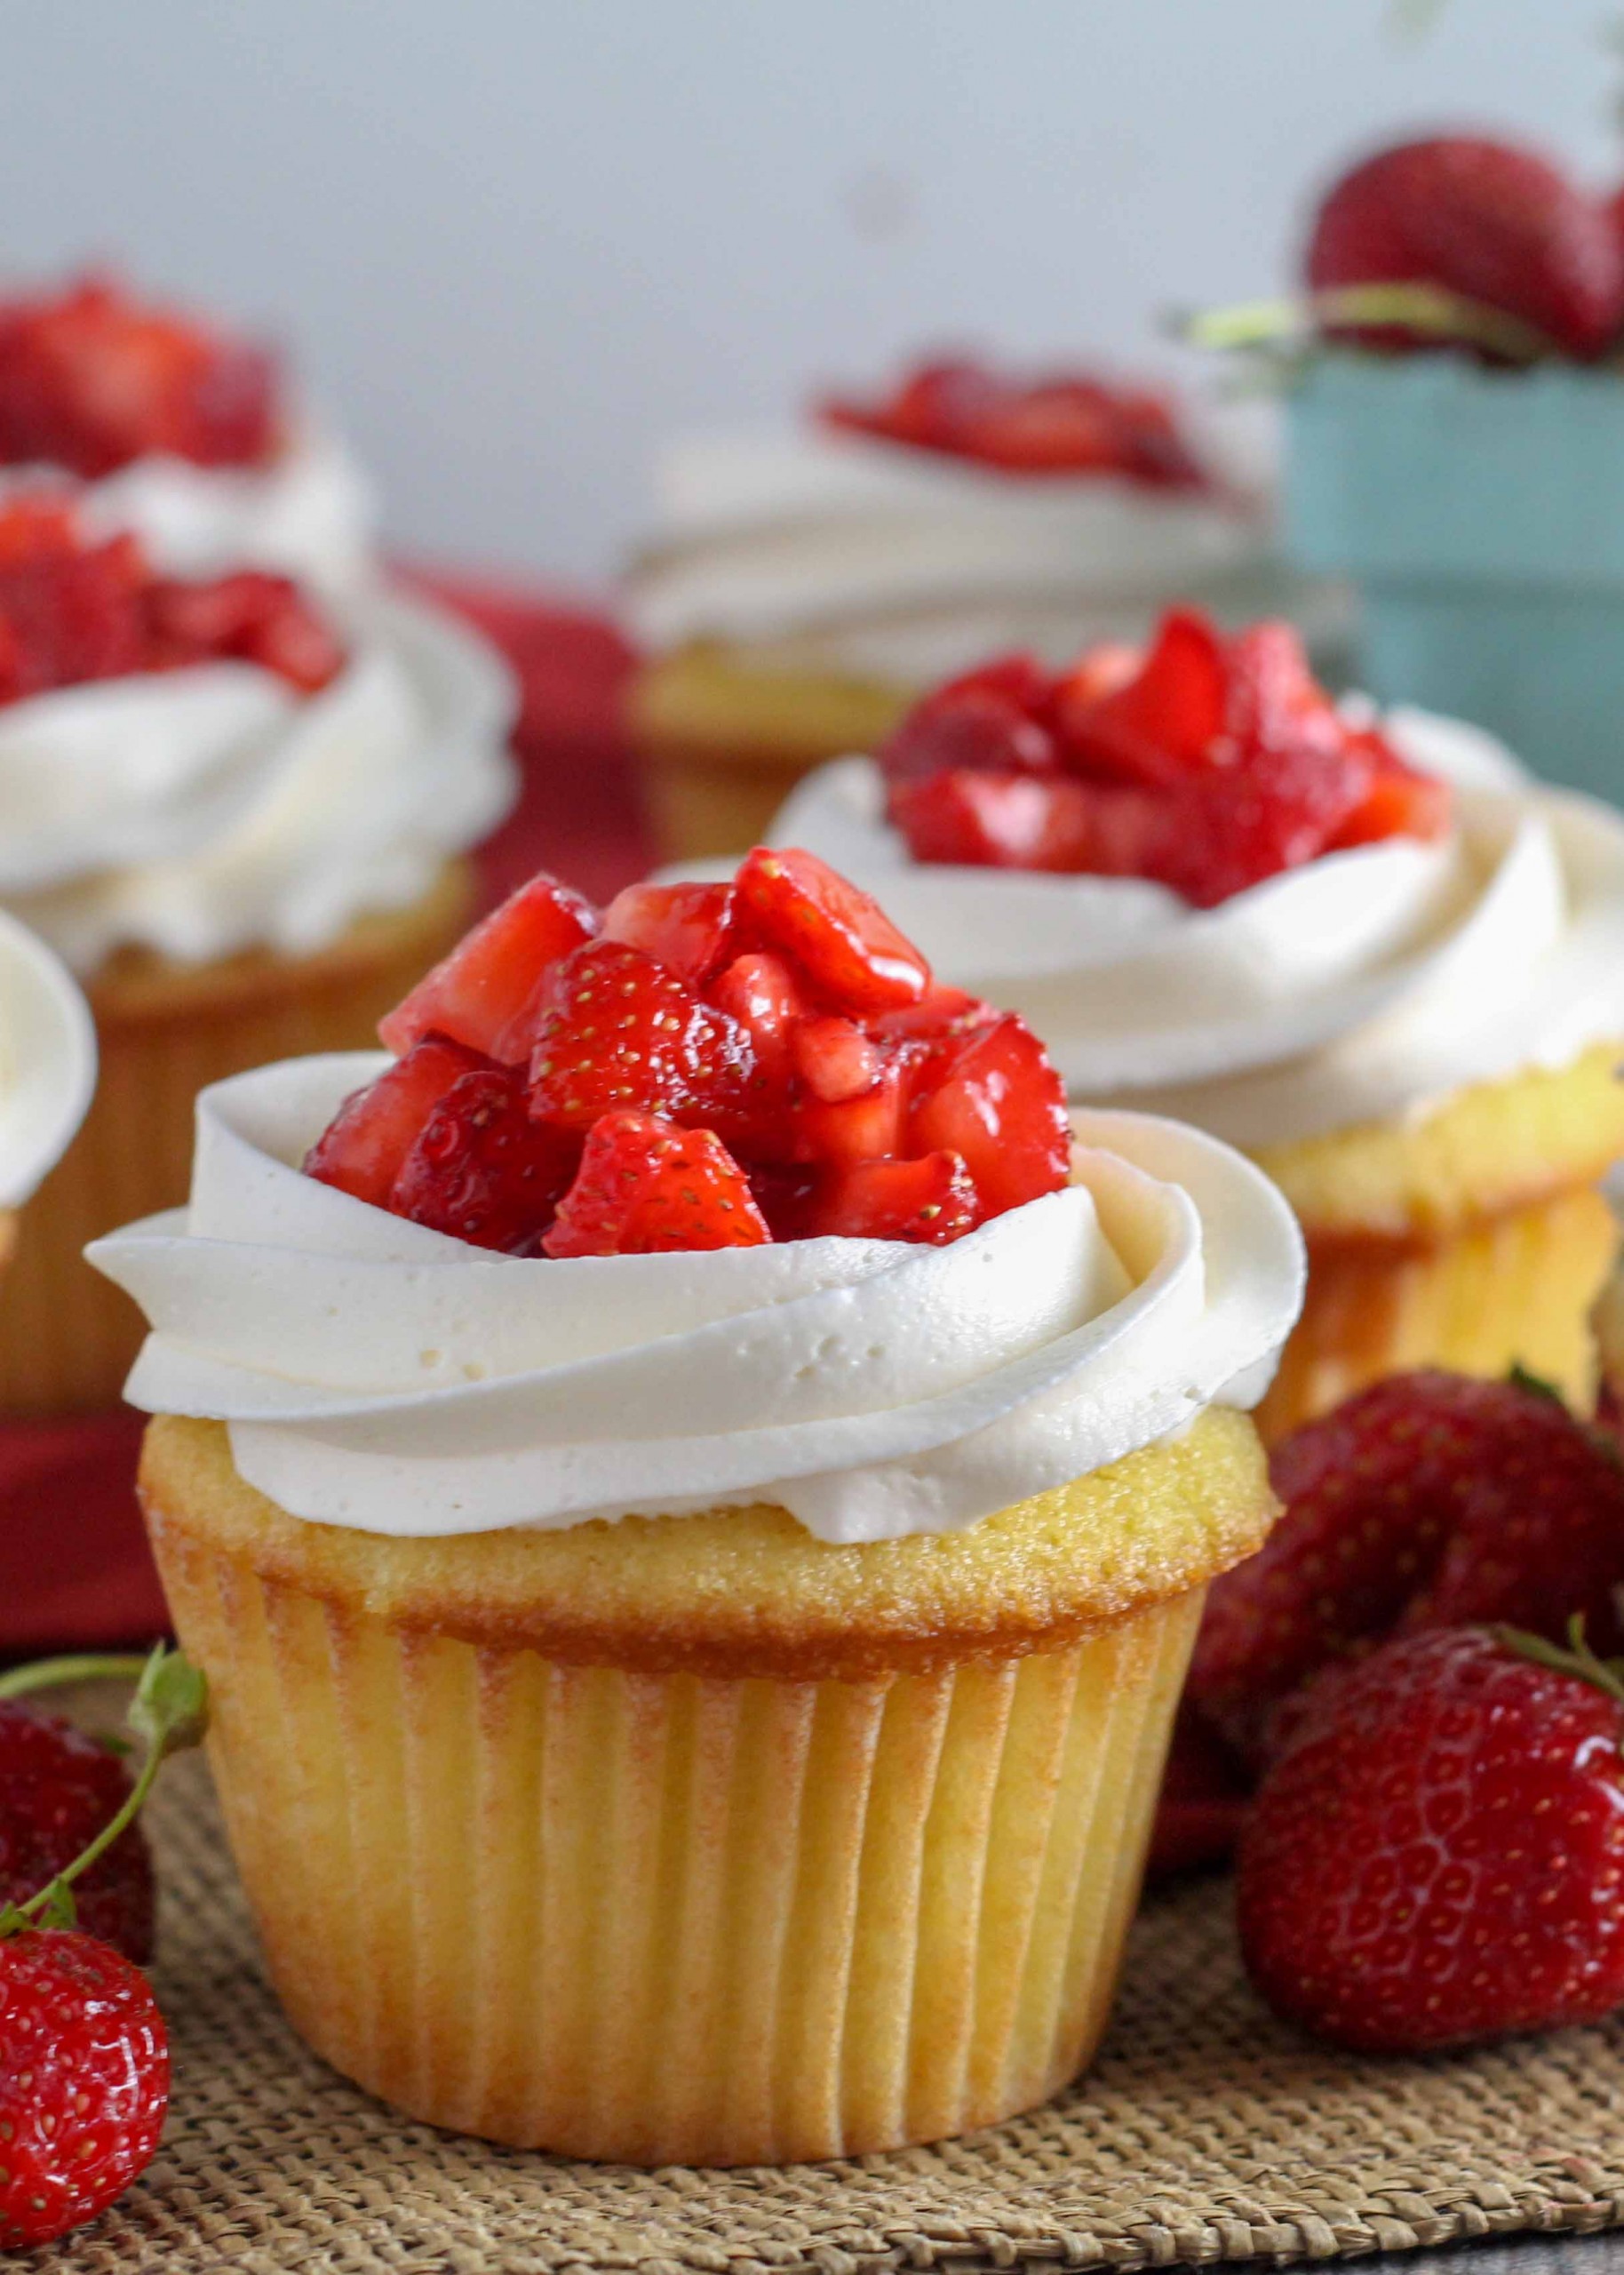 https://chocolatewithgrace.com/wp-content/uploads/2016/06/CWG-Strawberry-Shortcake-Cupcakes-1-1-of-1-scaled.jpg